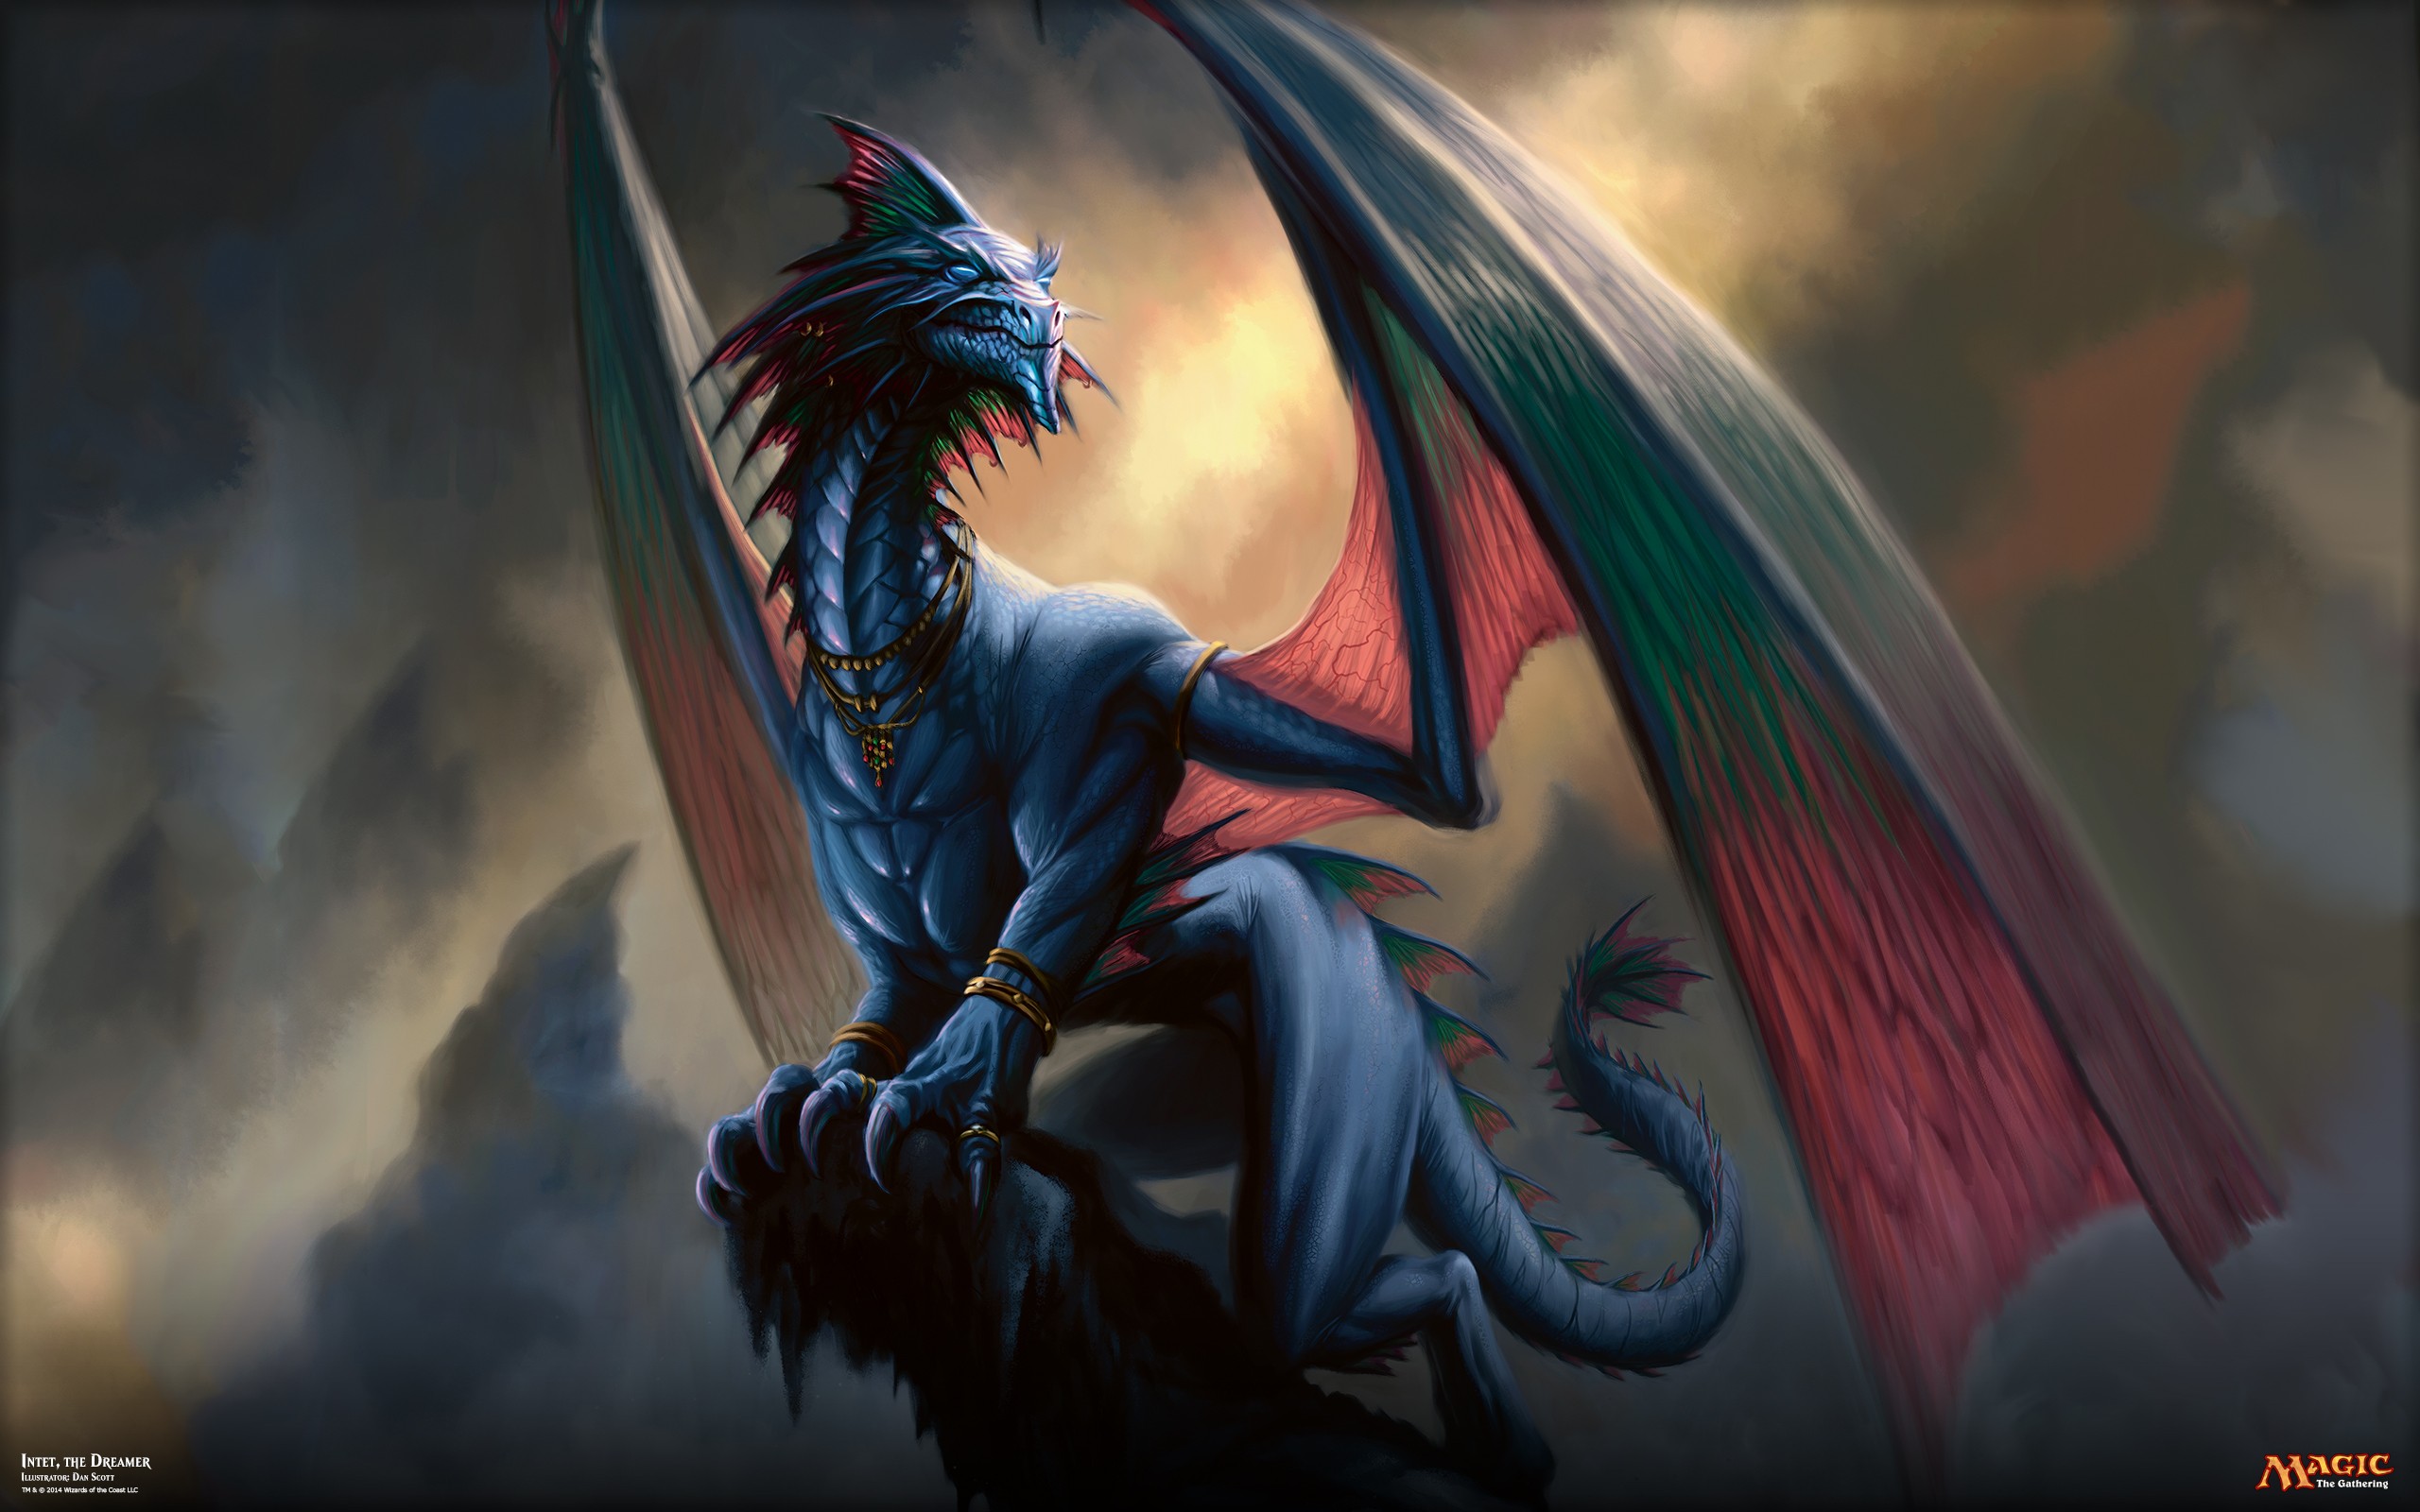 General 2560x1600 Magic: The Gathering magic dragon artwork